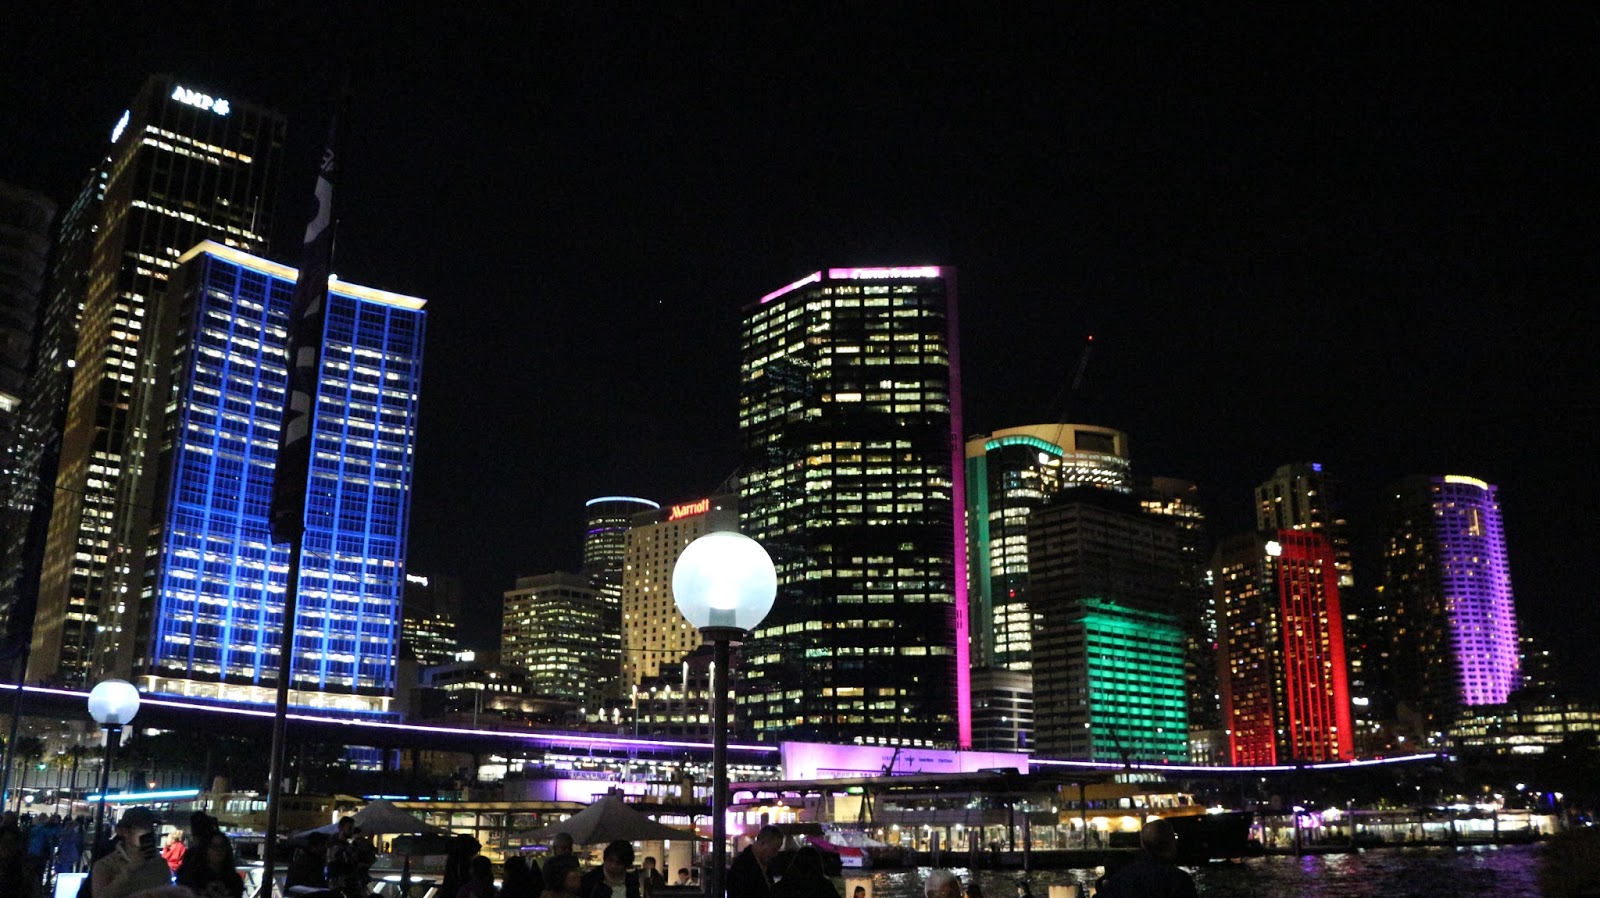 City of Sydney at night